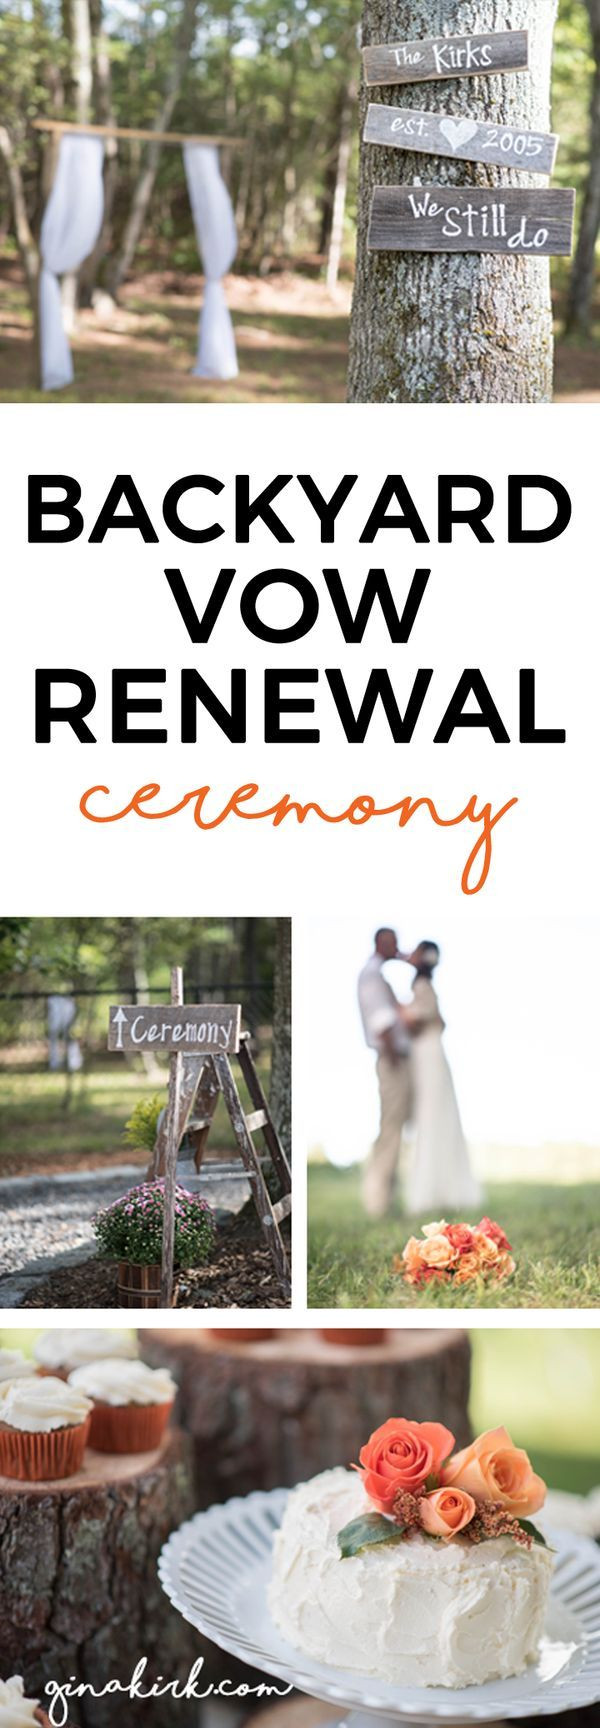 Wedding Vow Renewal Ideas
 Celebrating 10 Years Our Backyard Vow Renewal